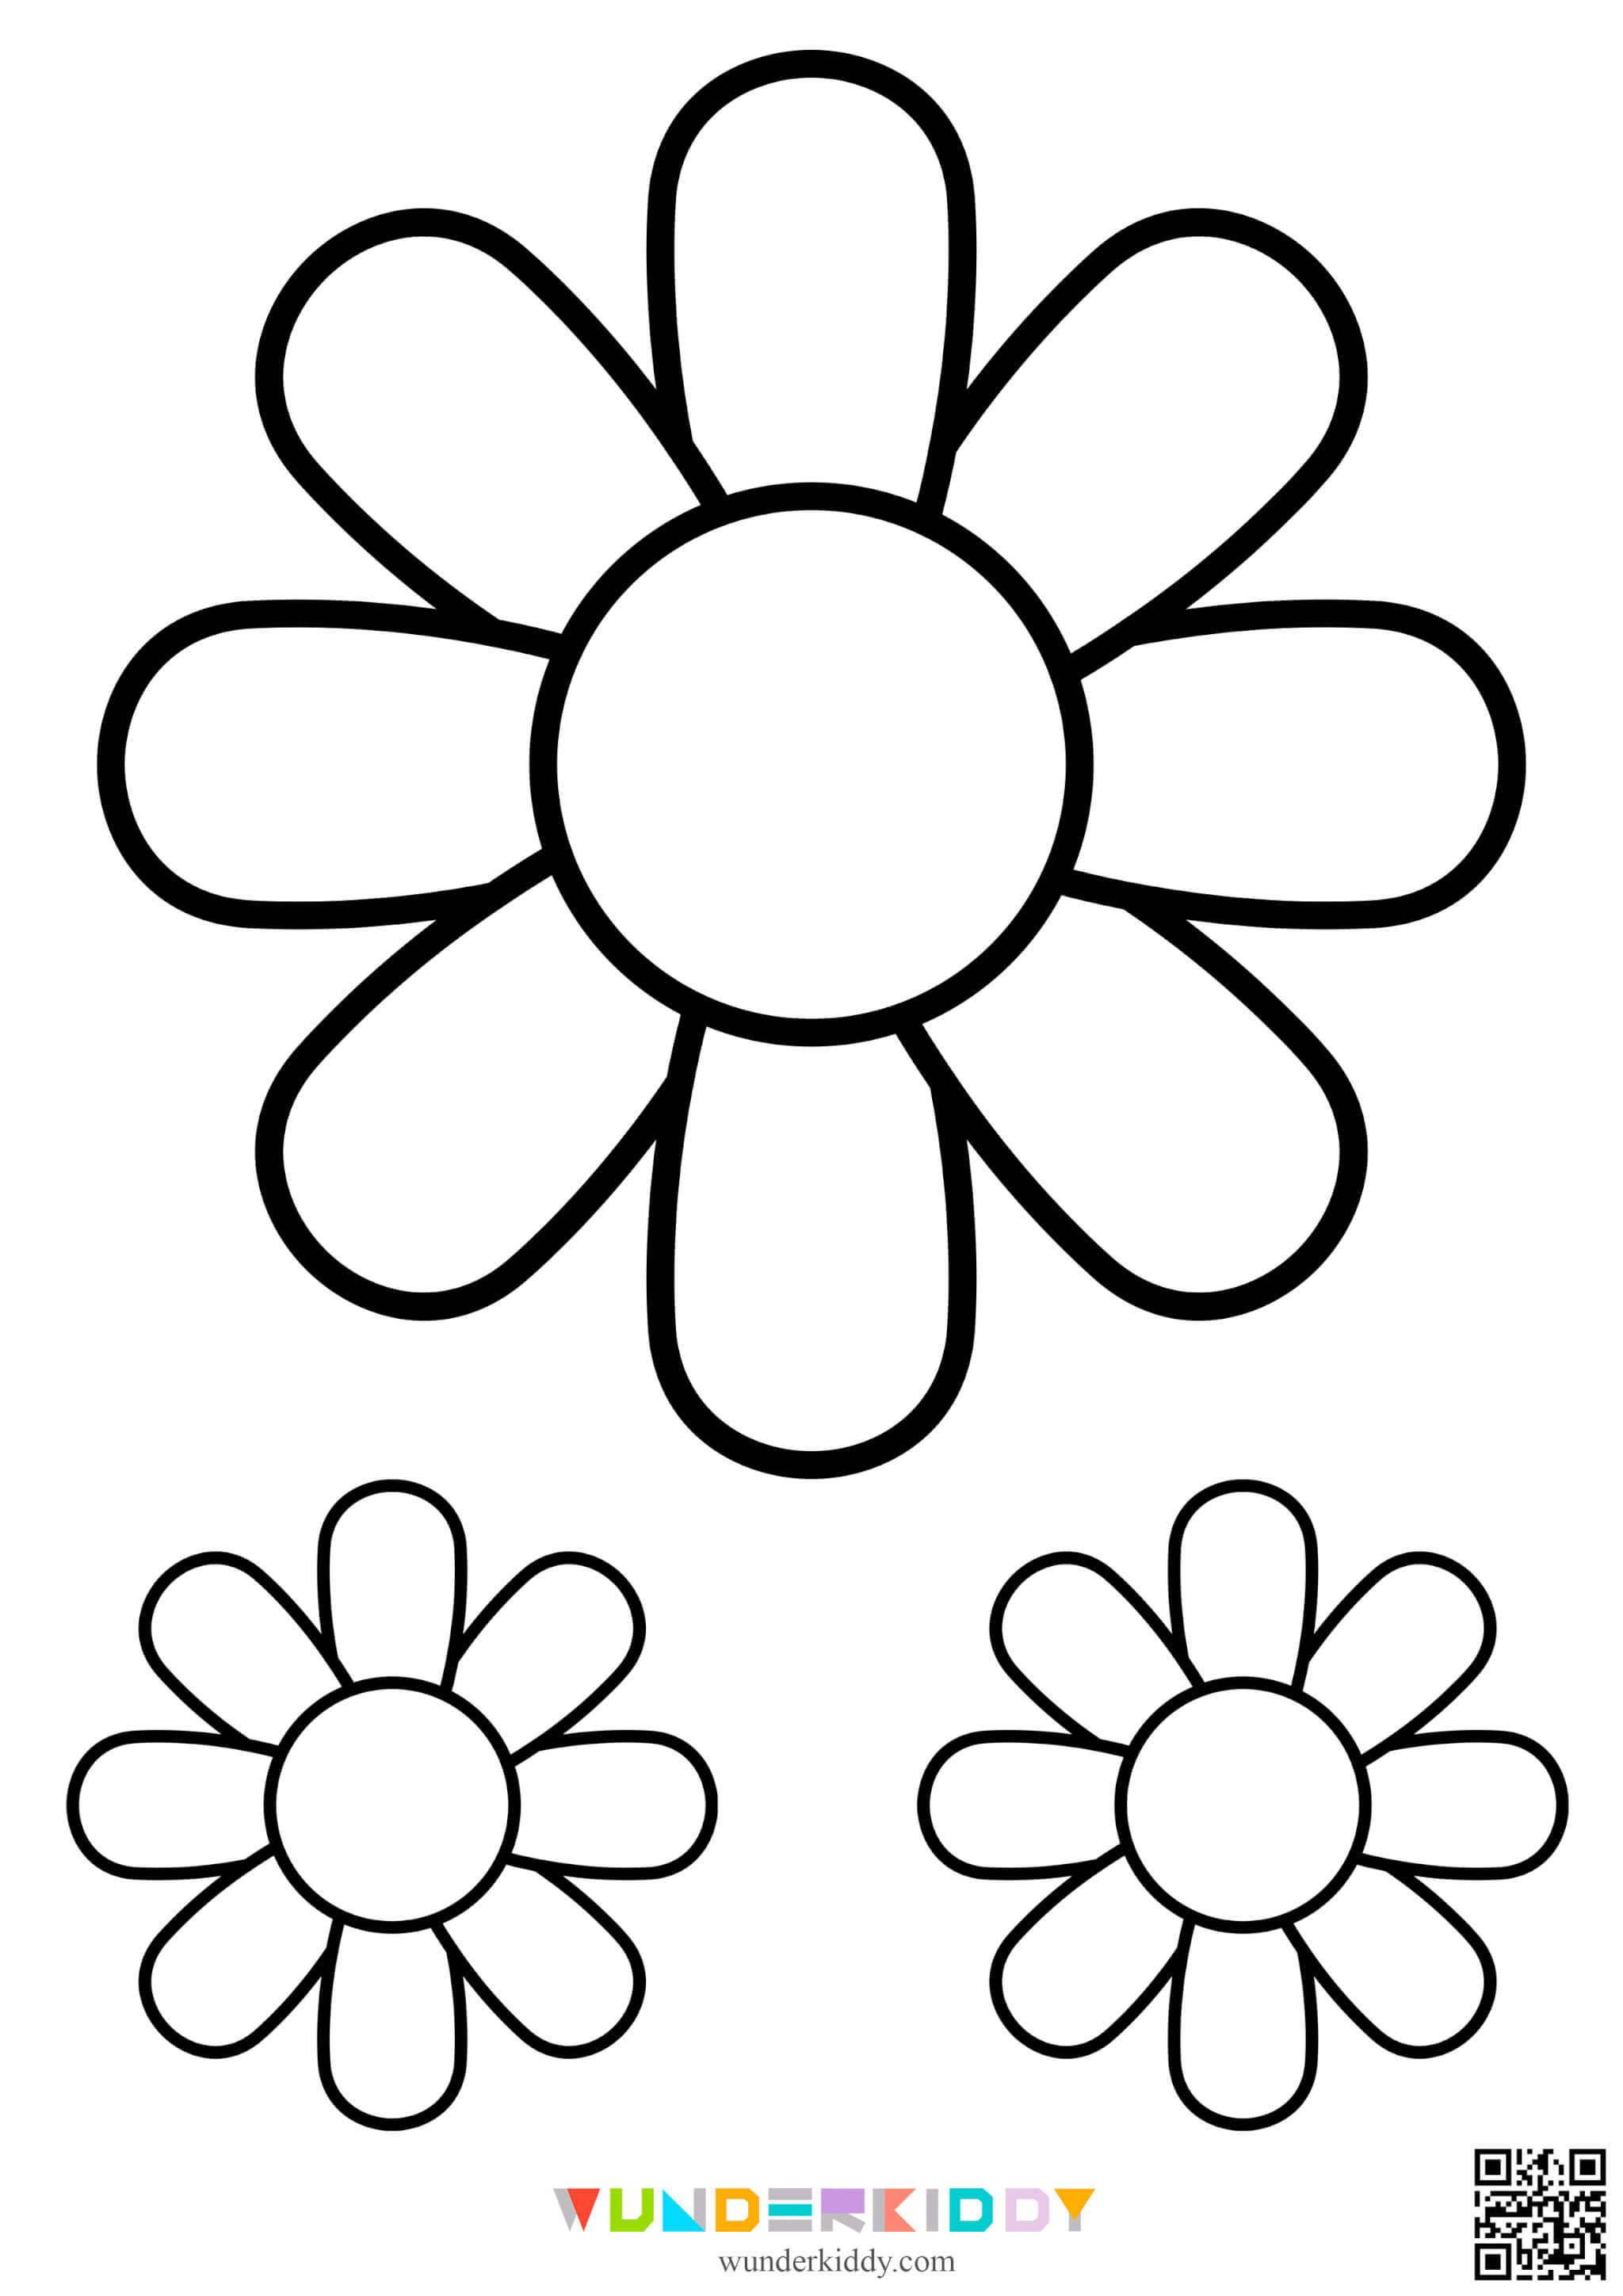 Simple Flower Templates - Image 10